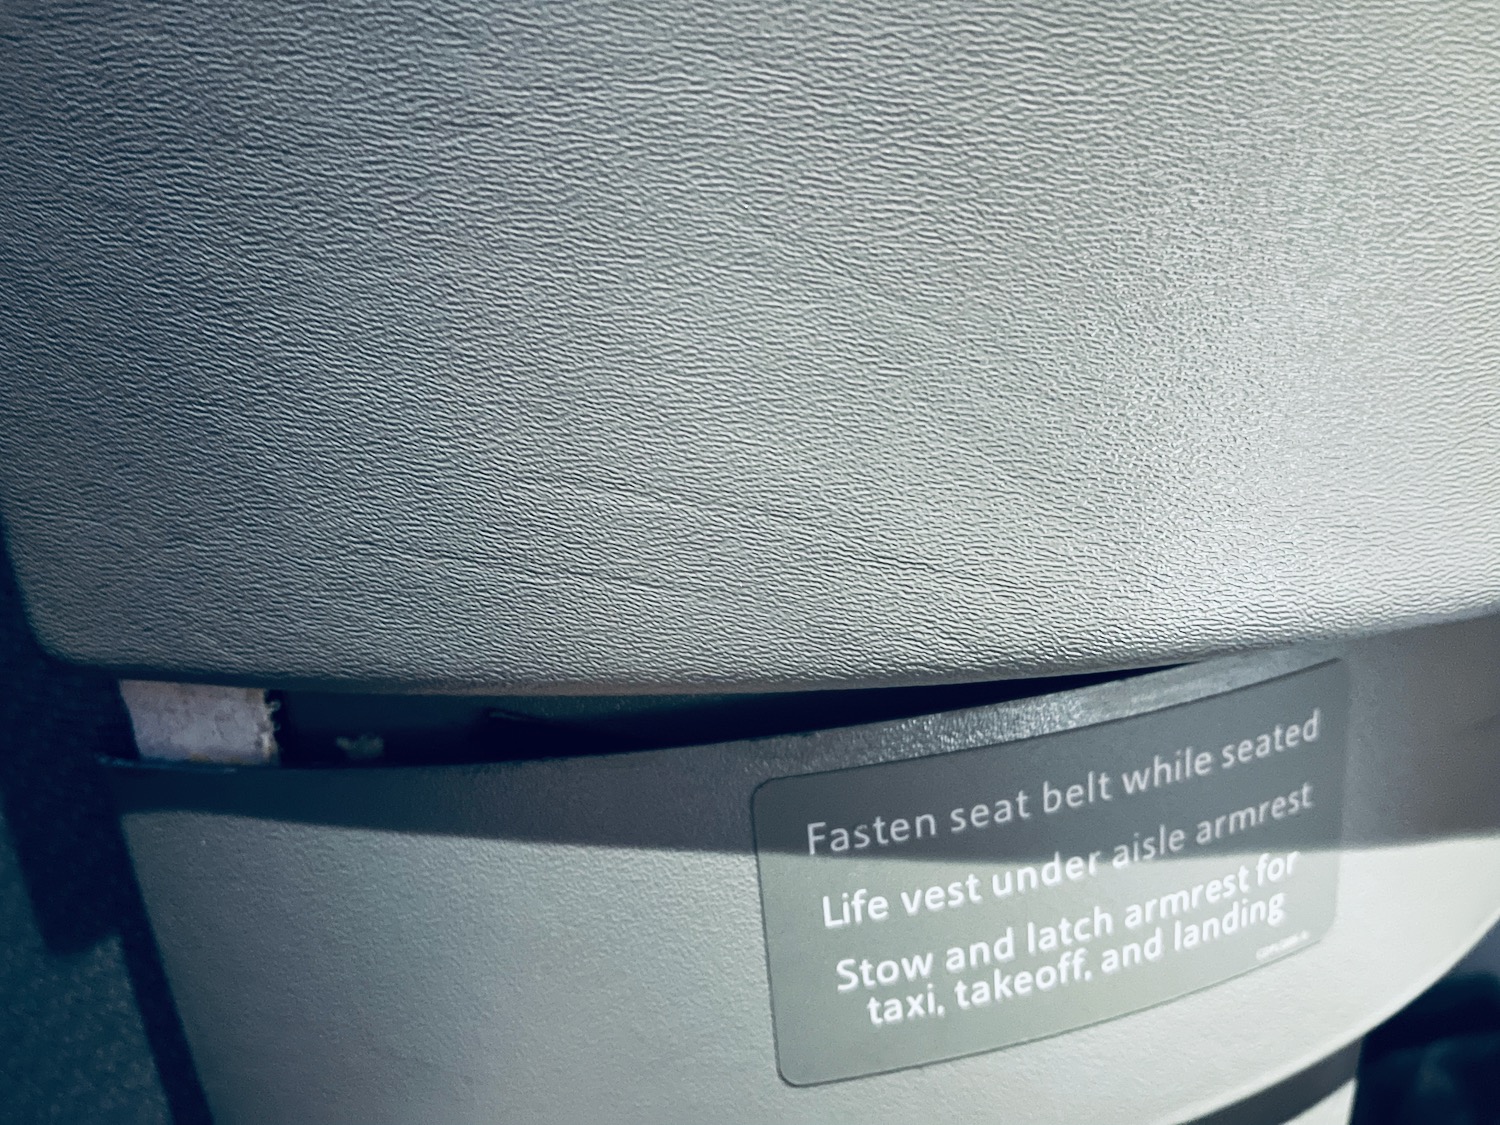 a close up of a seat belt